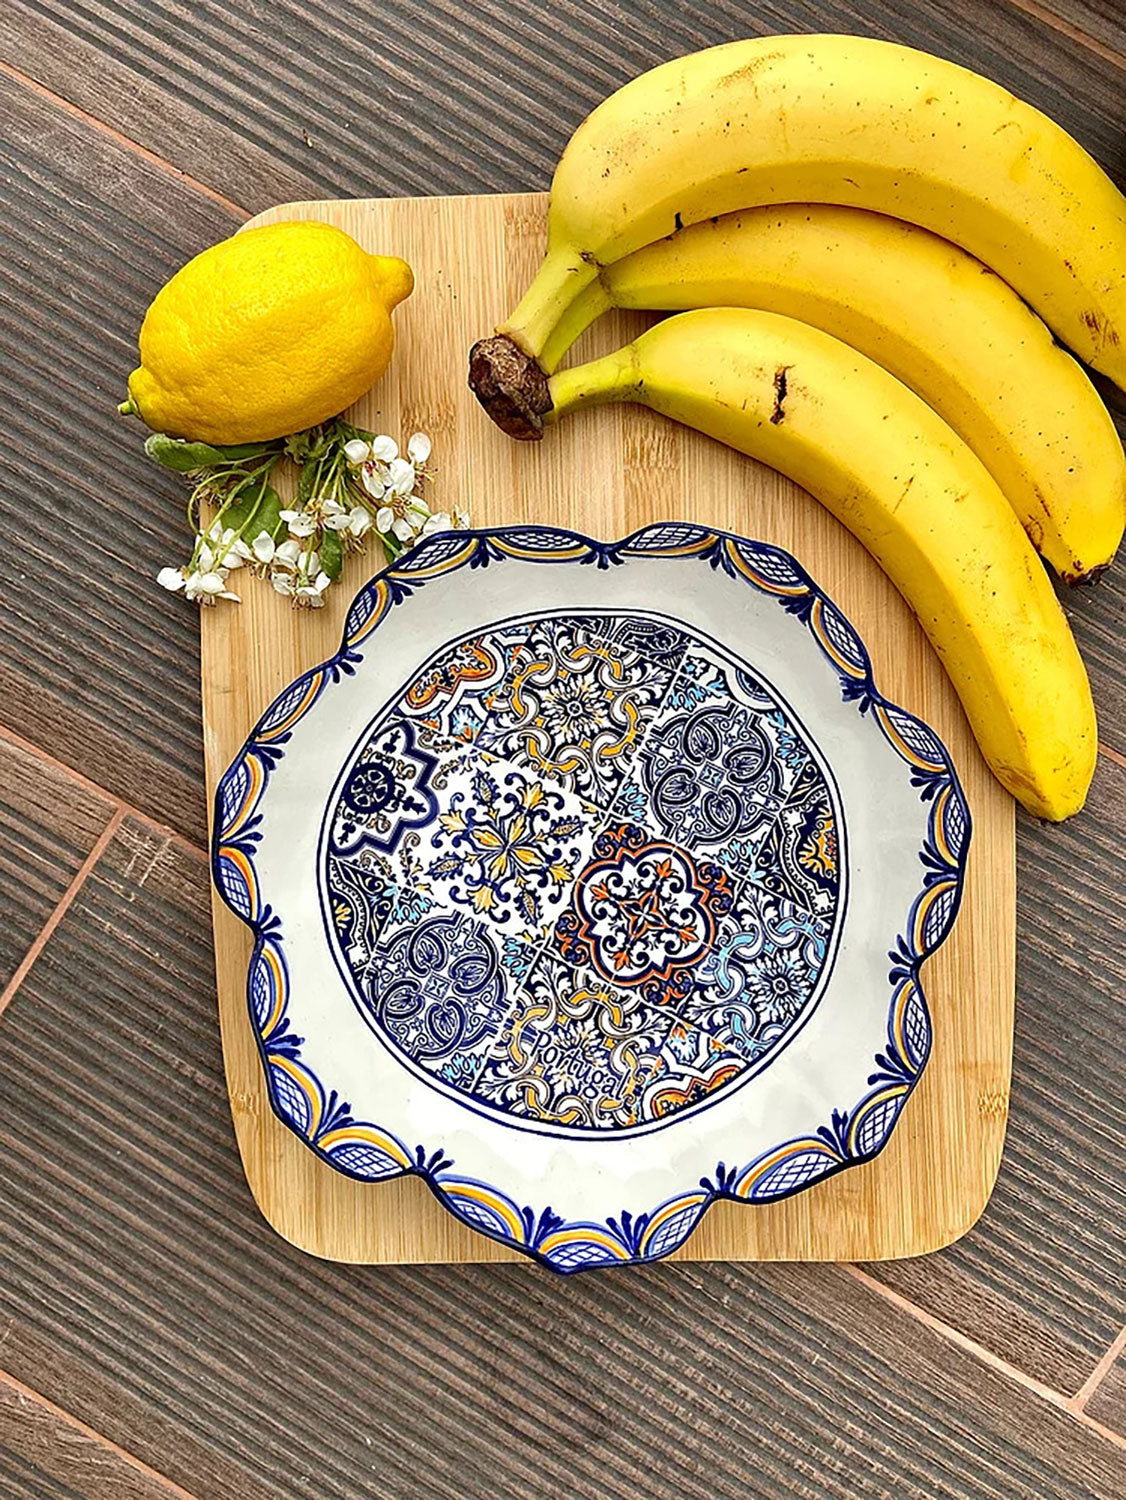 Portuguese Pottery Alcobaça Ceramic Decorative Salad Serving Bowl